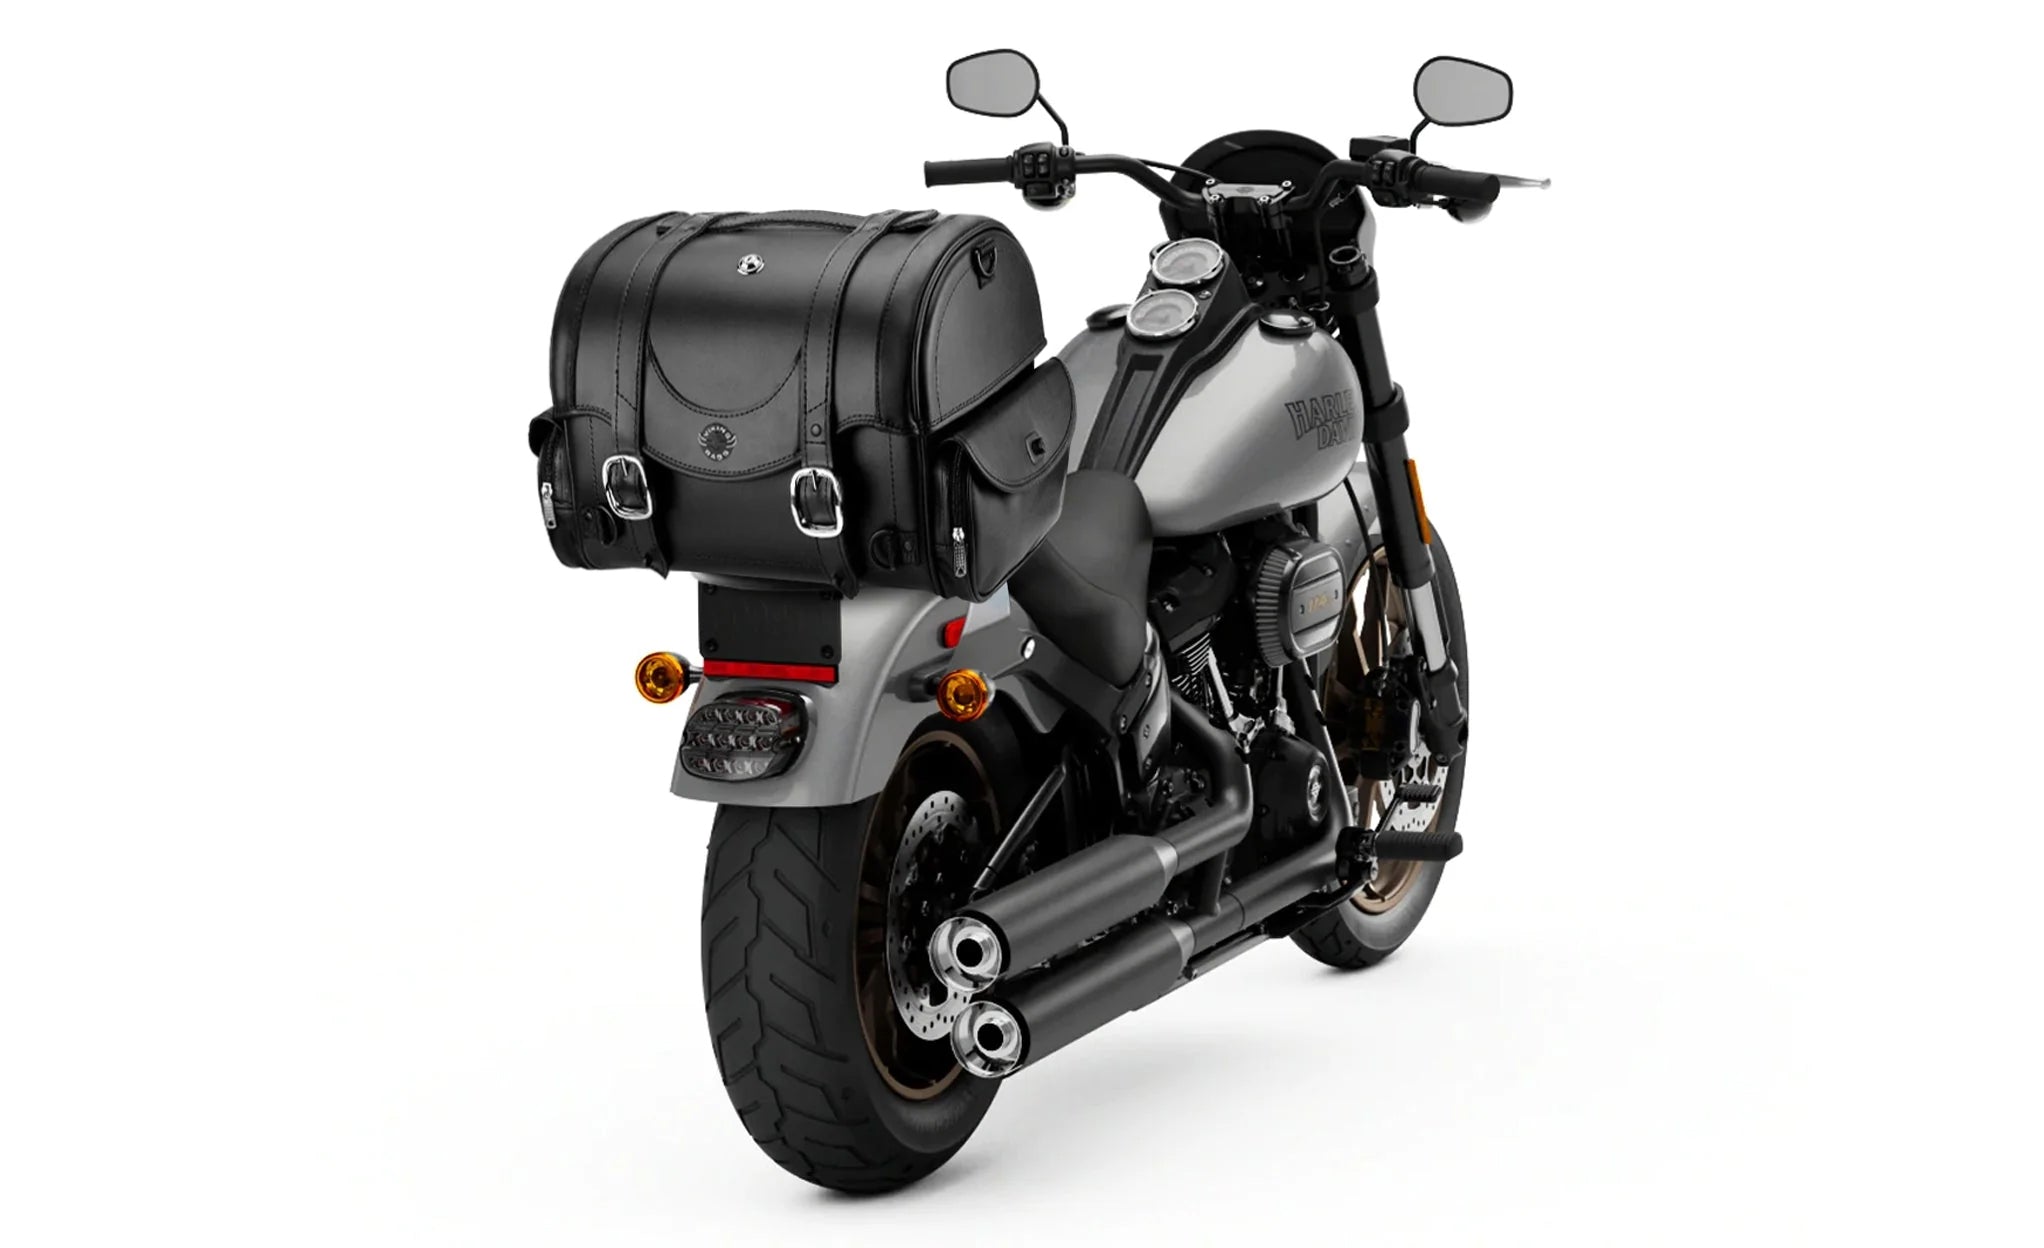 21L - Century Medium Kawasaki Leather Motorcycle Roll Bag on Bike Photo @expand